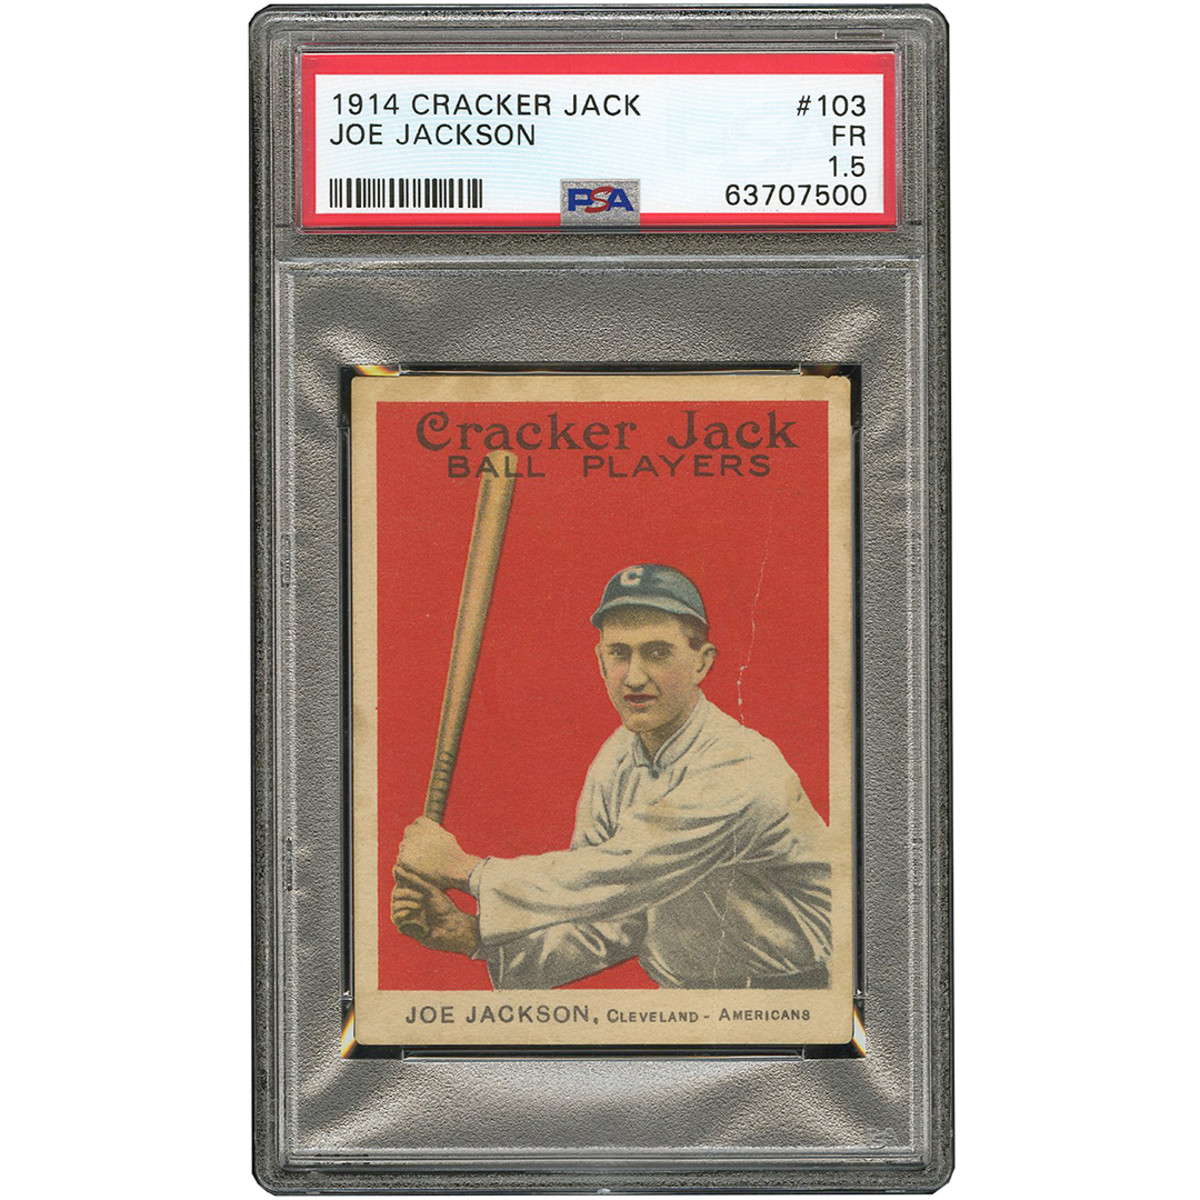 1914 Cracker Jack Joe Jackson card.